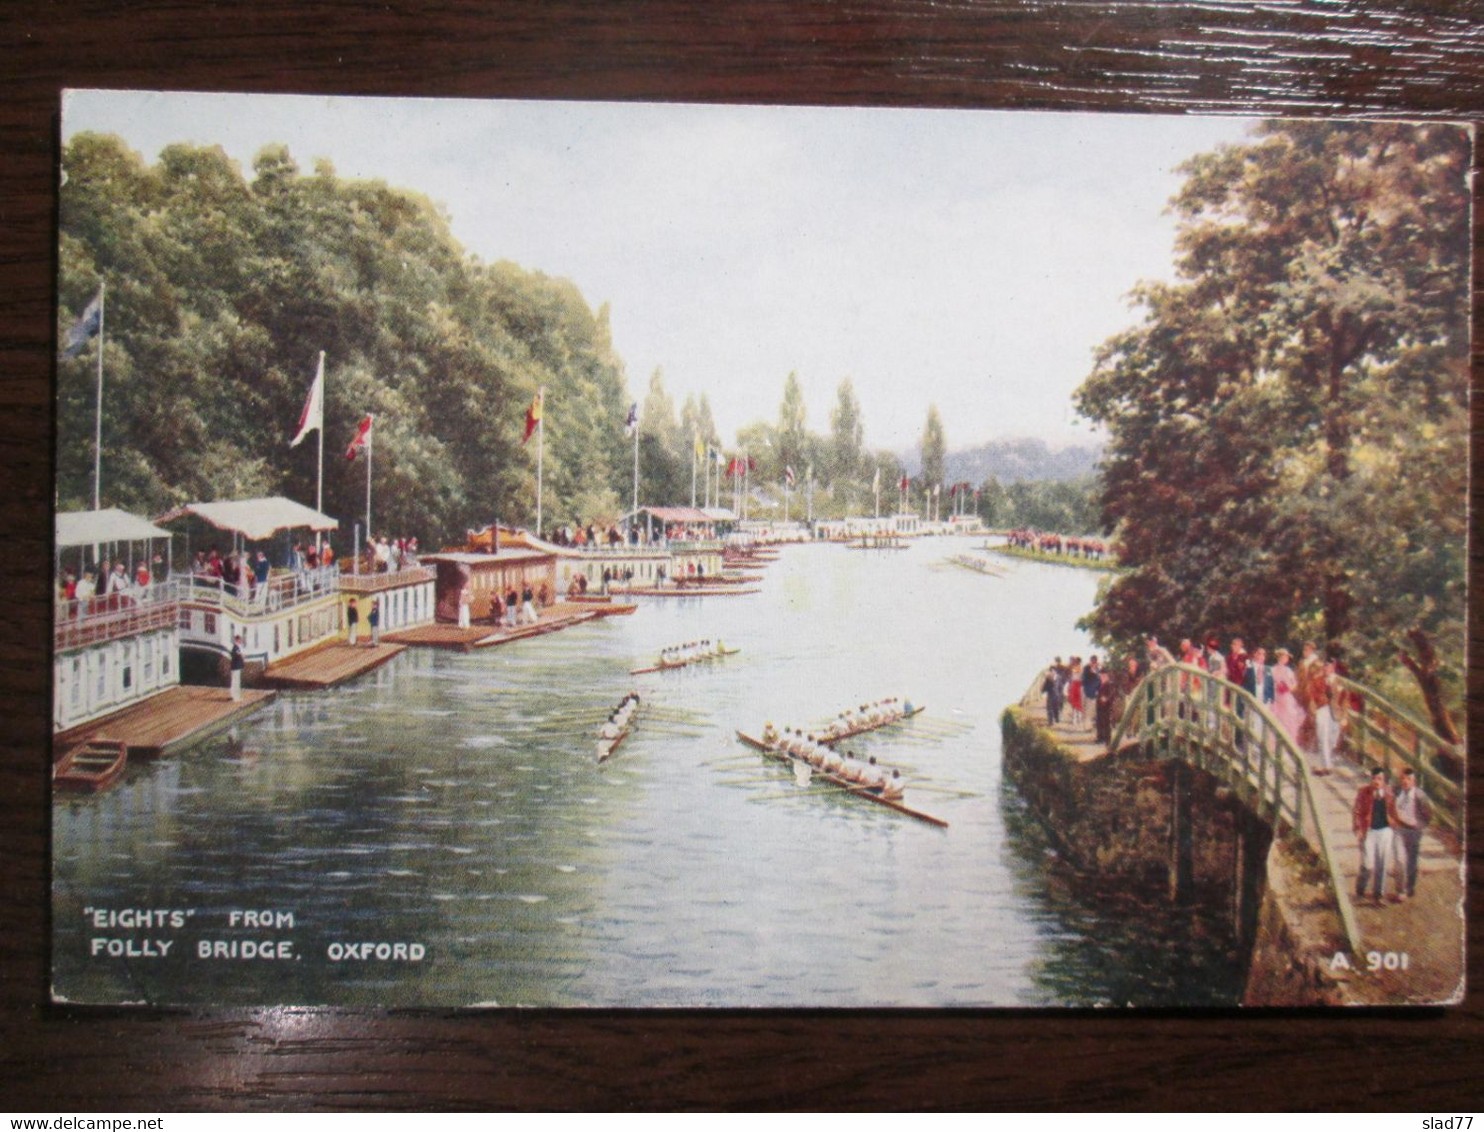 Rowing Team Oxford - Rowing